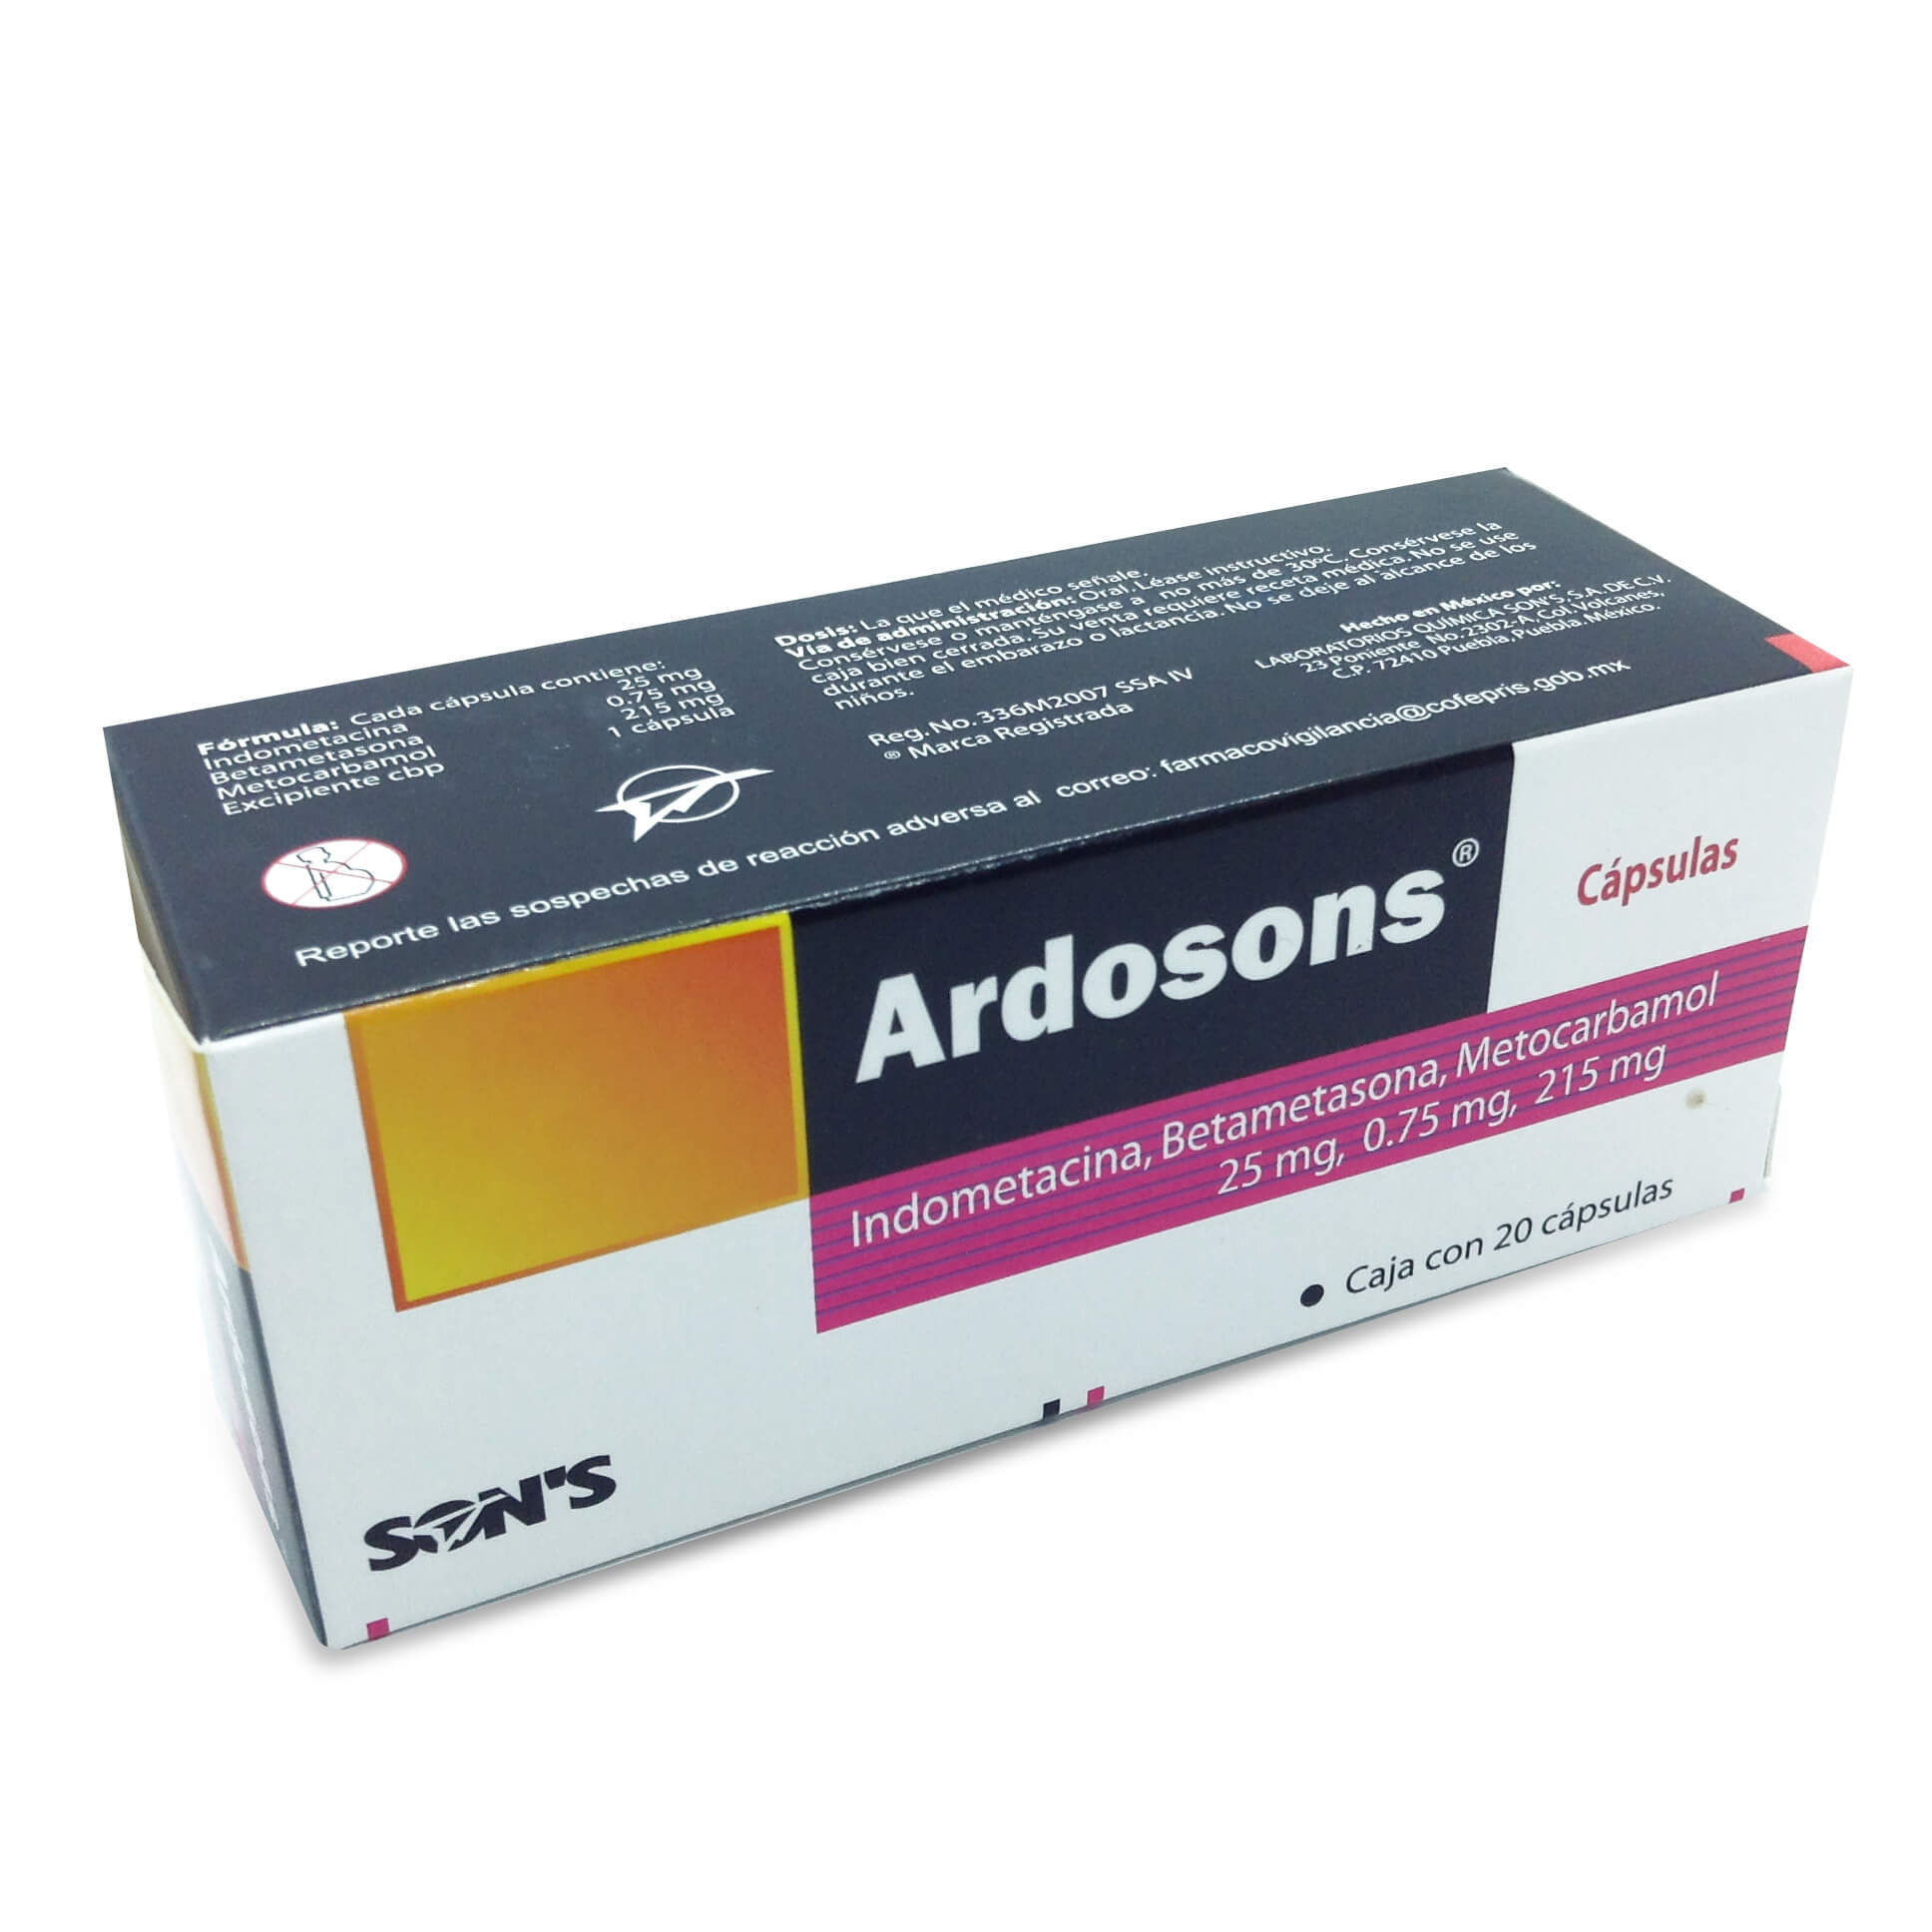 Ardosons Capsules- DATOS